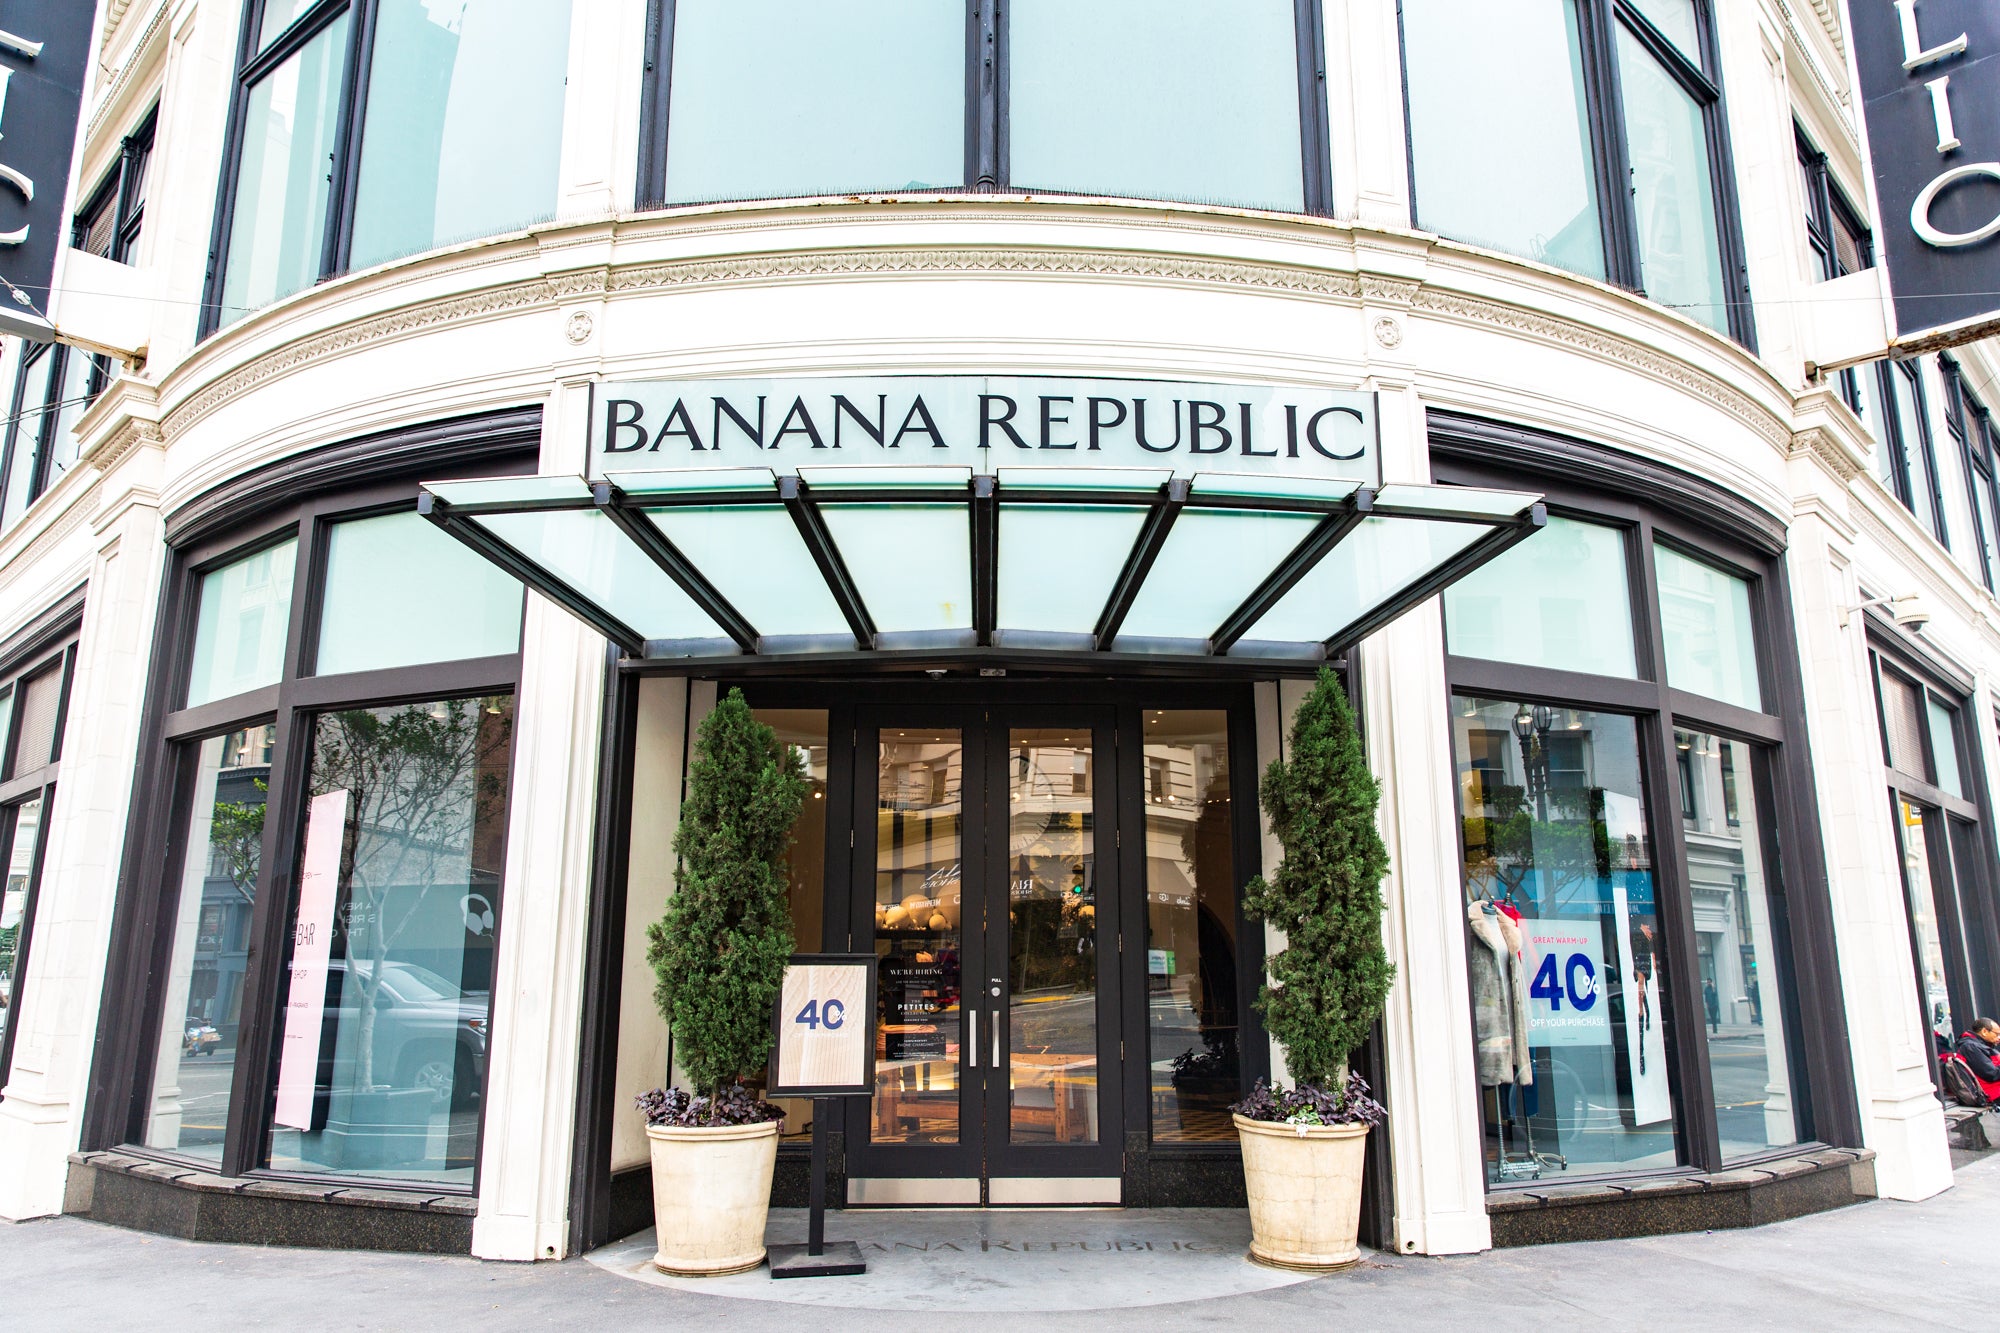 Banana Republic store exterior